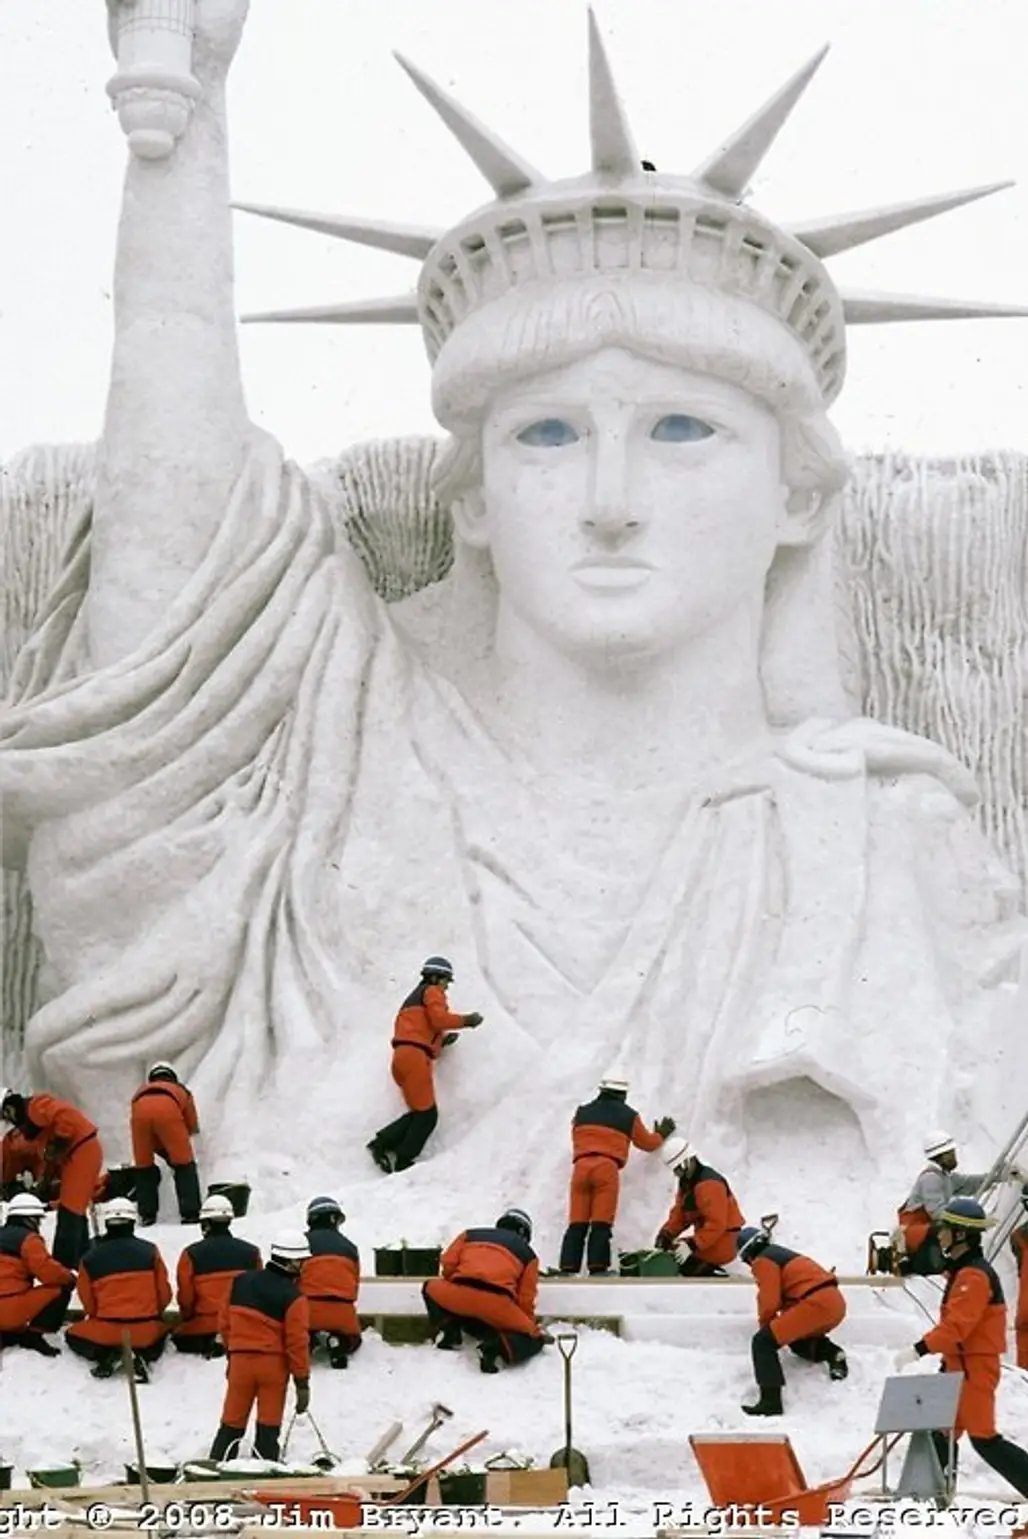 Lady Liberty at Yukimatsuri/Snow Sculpture Festival, Sapporo, Japan